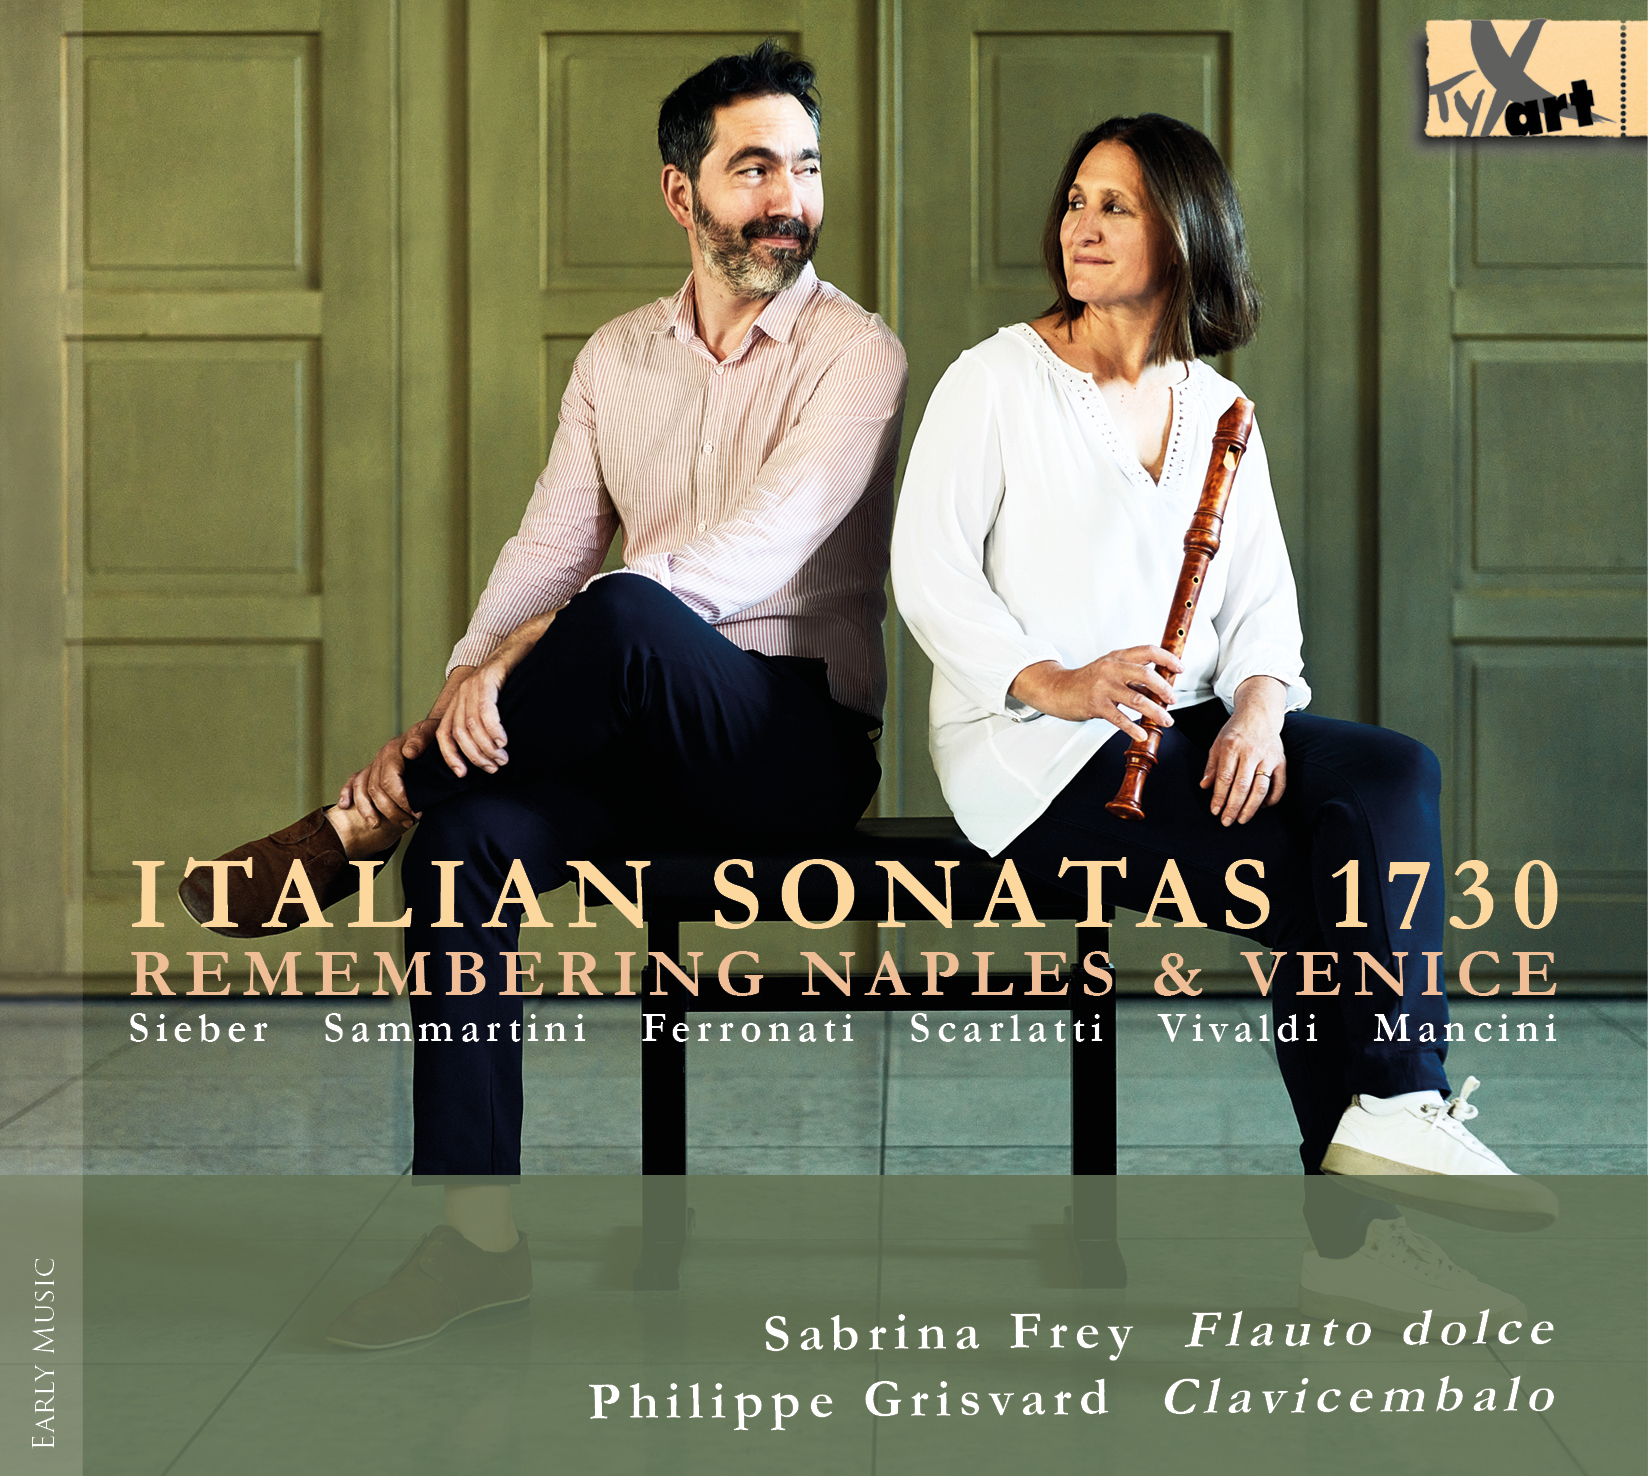 Italian Sonatas 1730 - Sabrina Frey & Philippe Grisvard